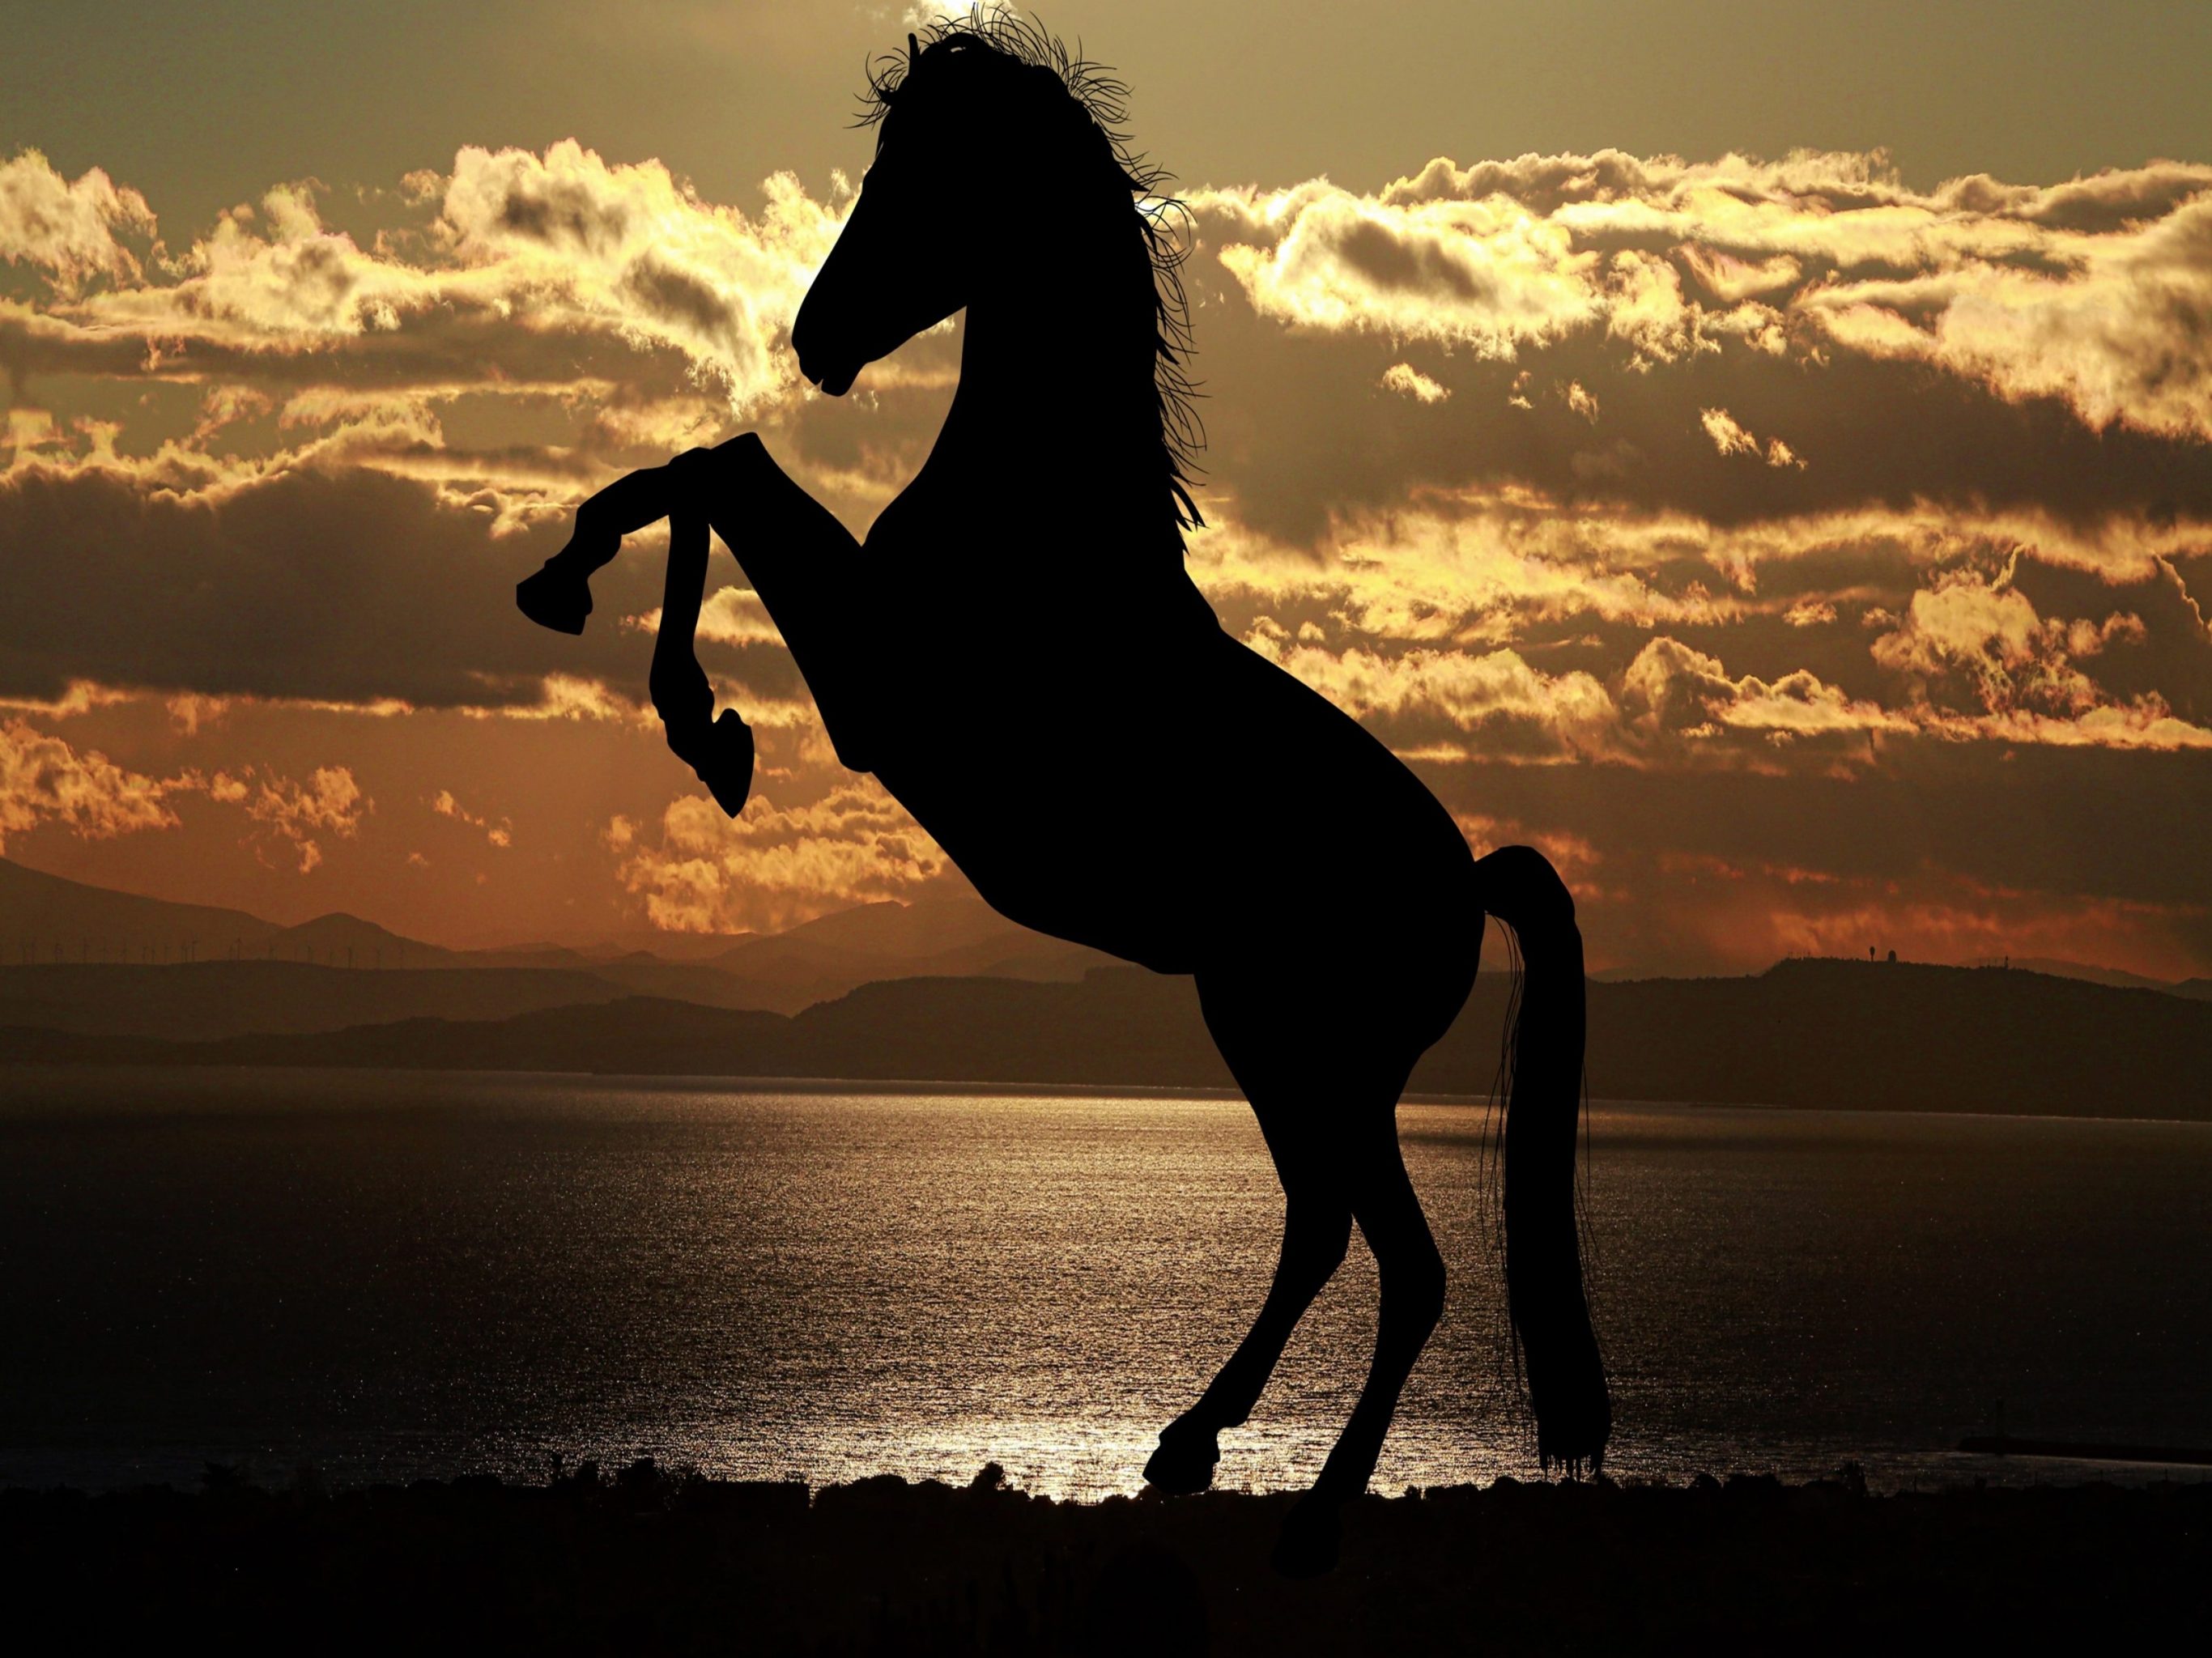 500+ Black Horse Pictures [HD] | Download Free Images on Unsplash